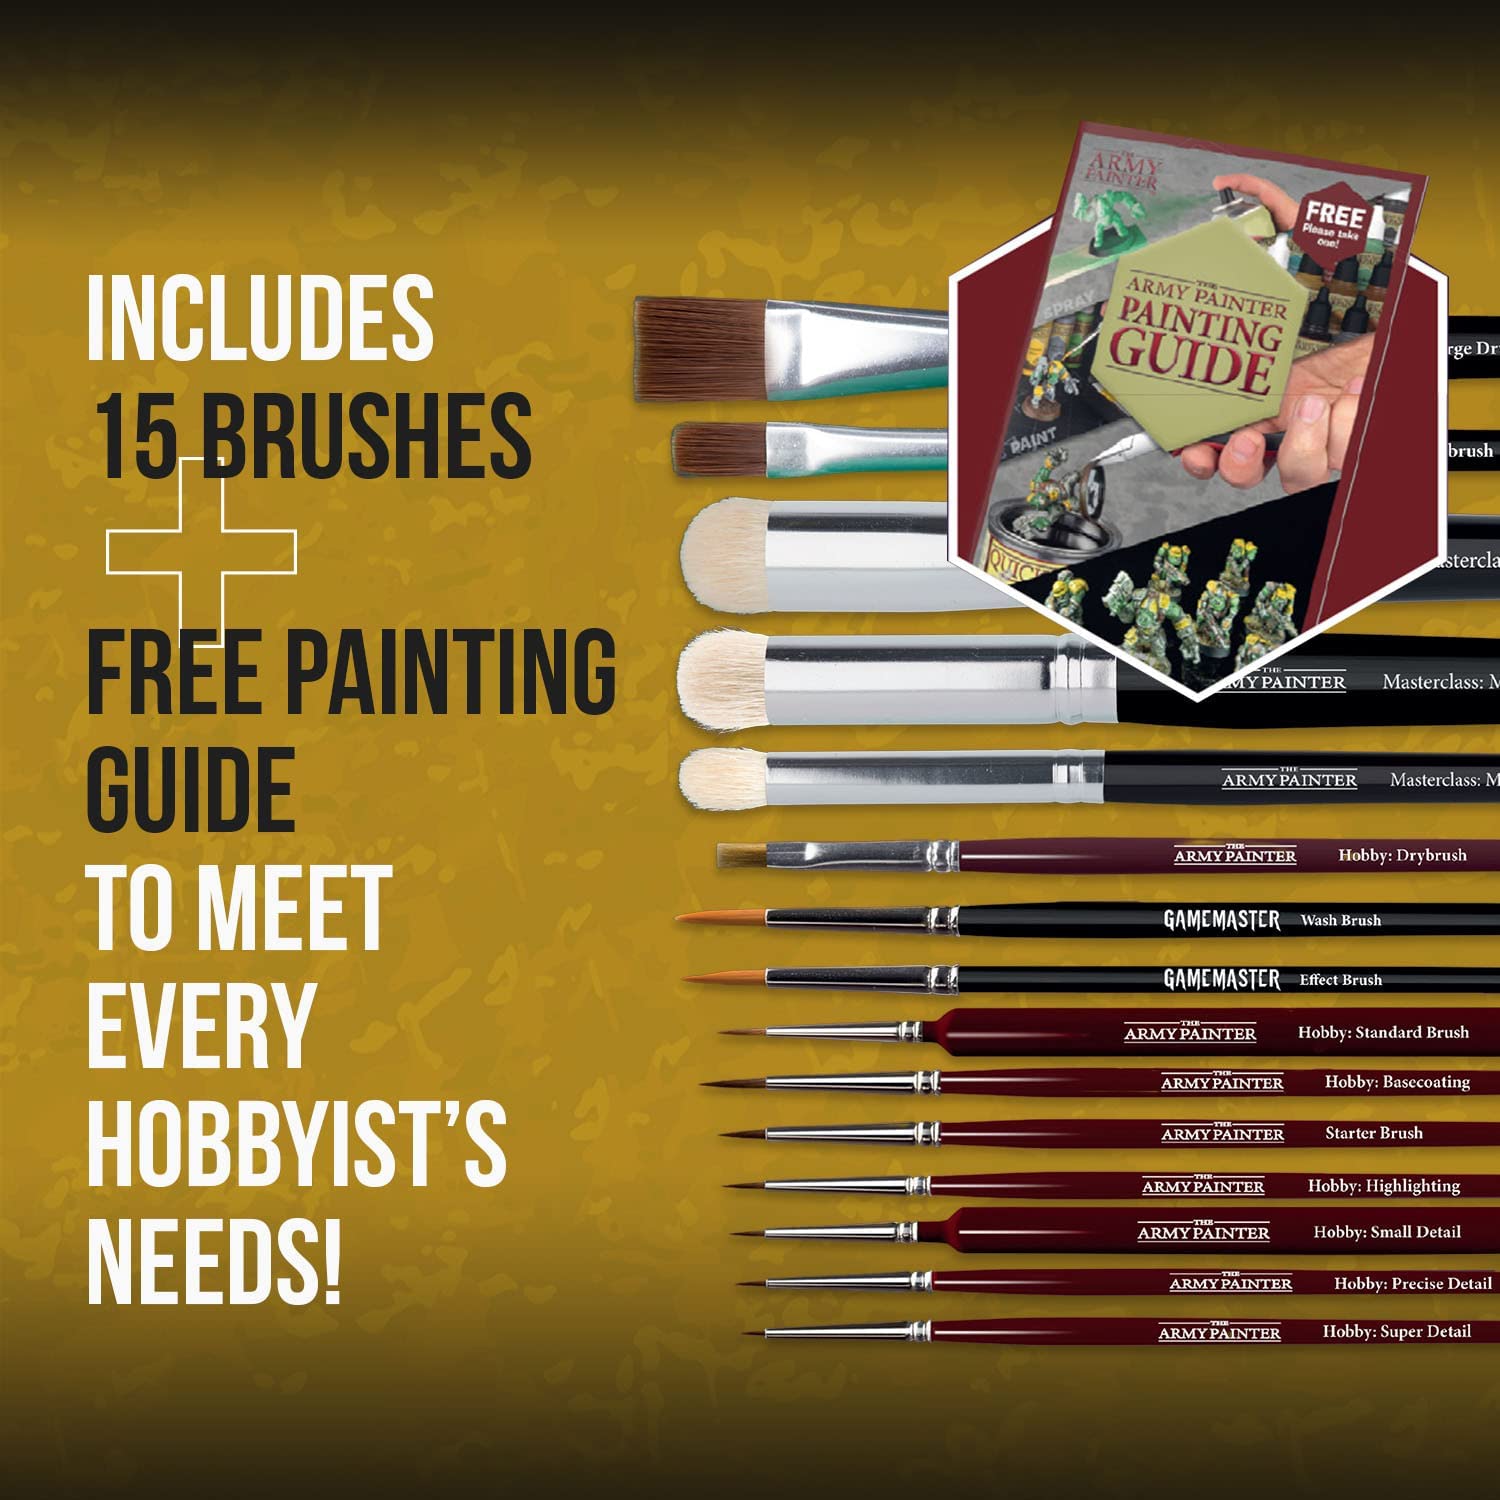 Army Painter - Hobby Brush - Super Detail